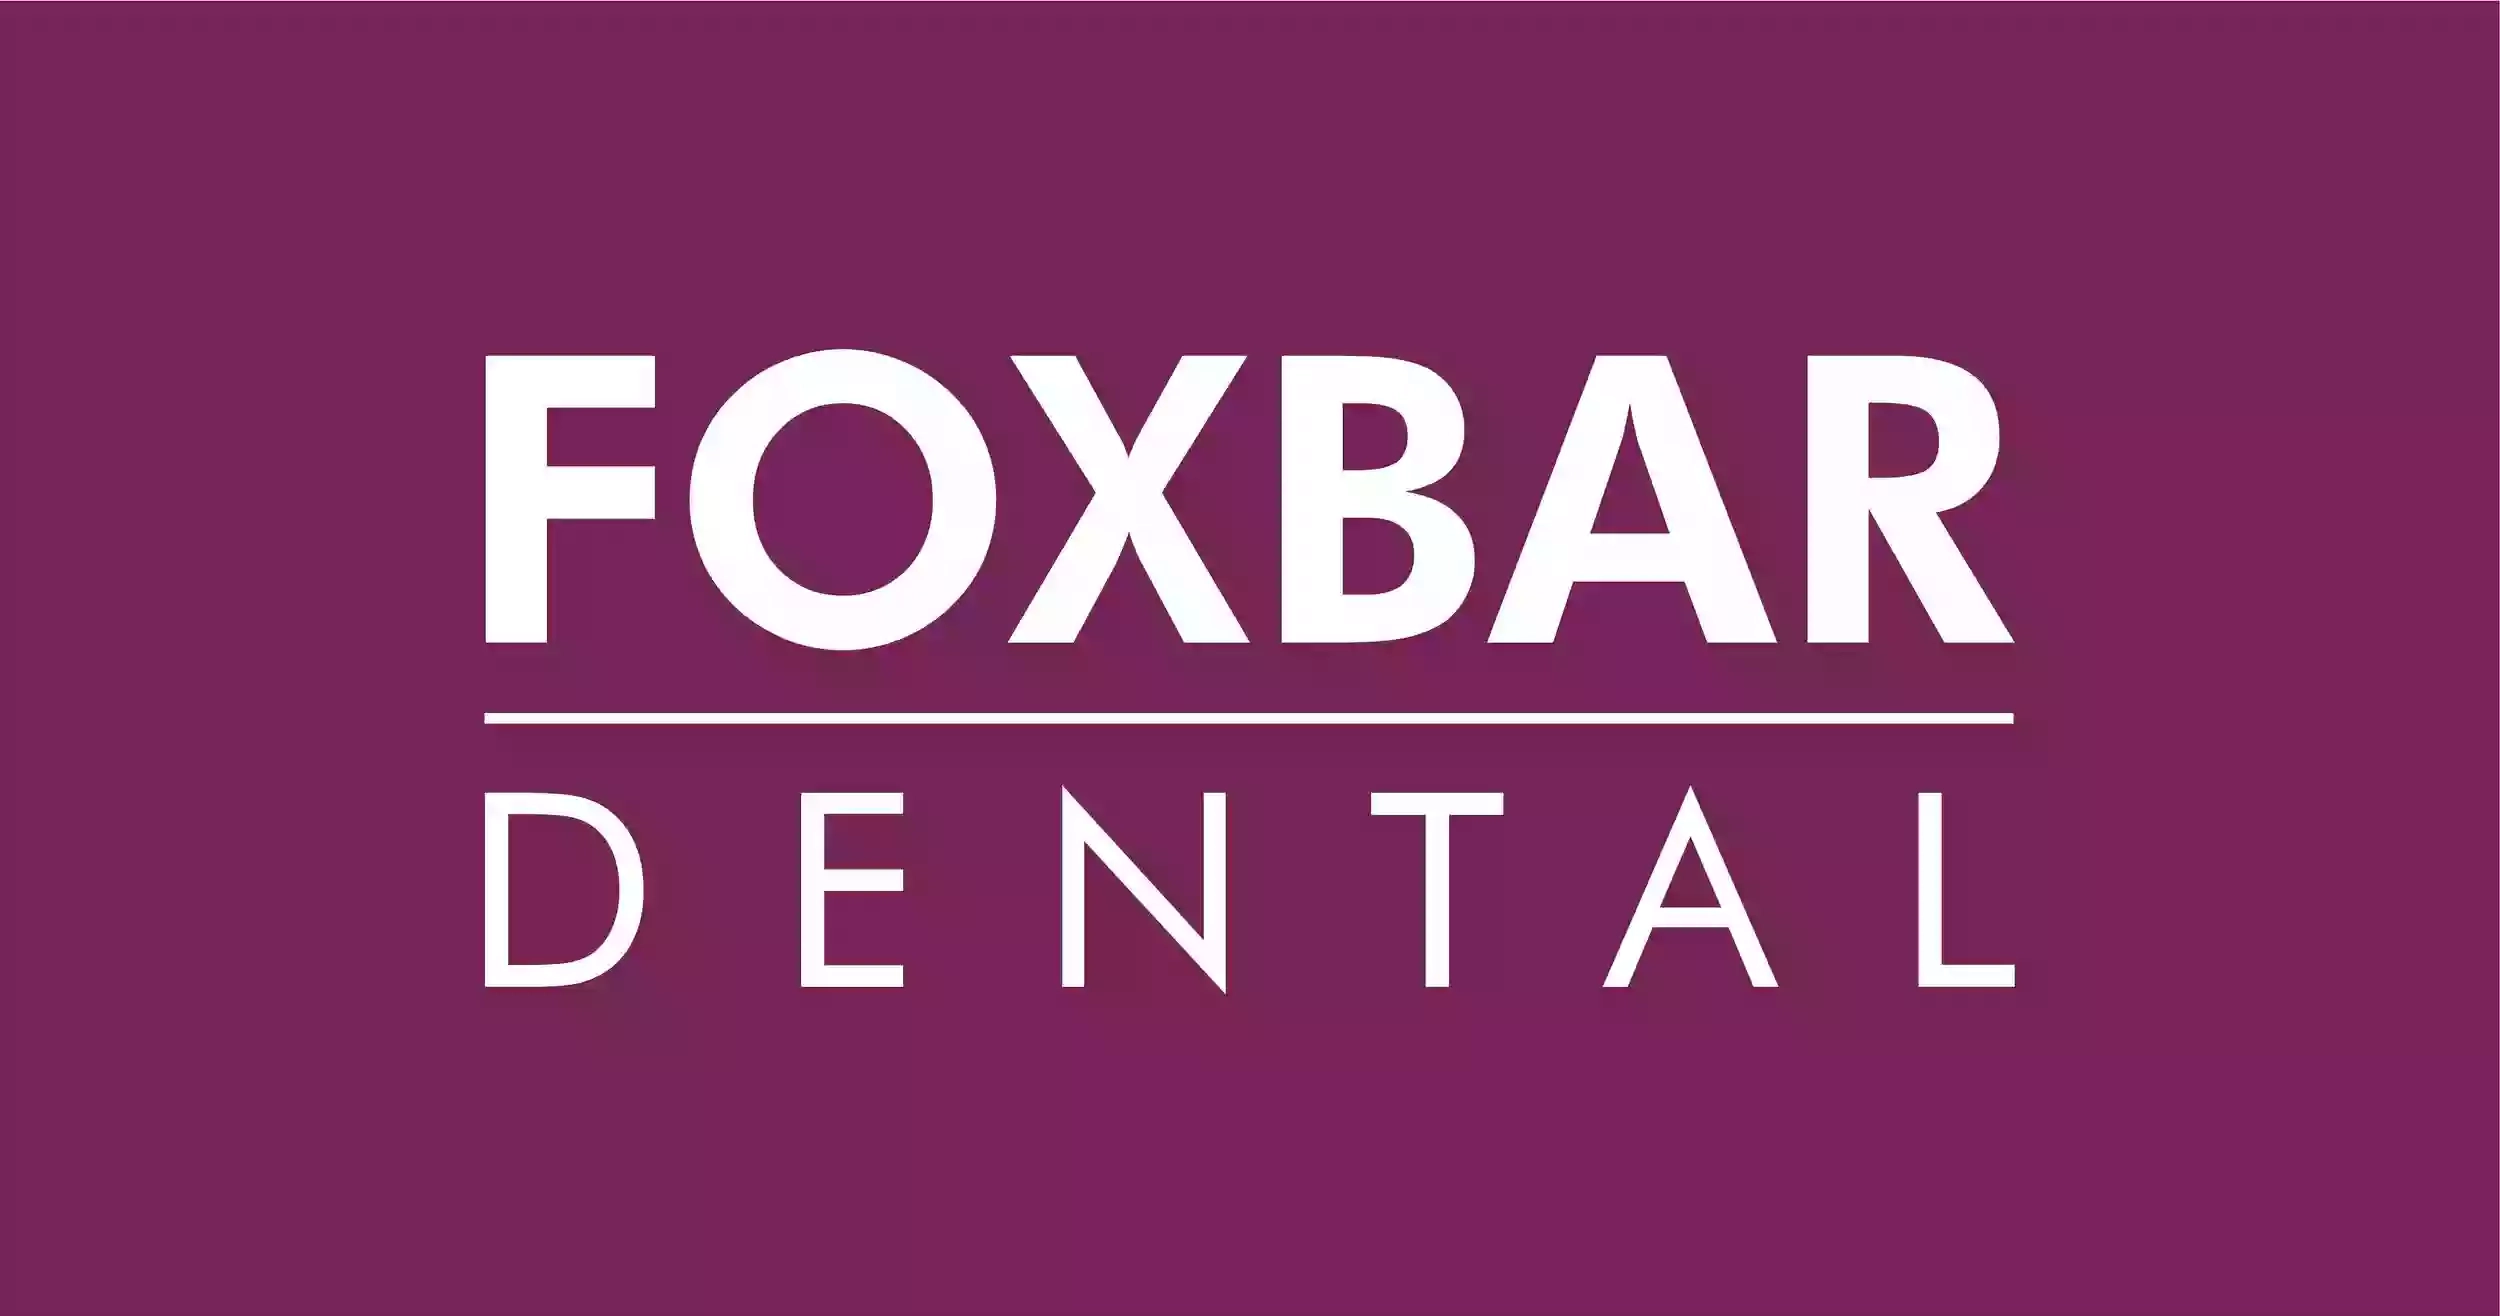 Foxbar Dental Practice